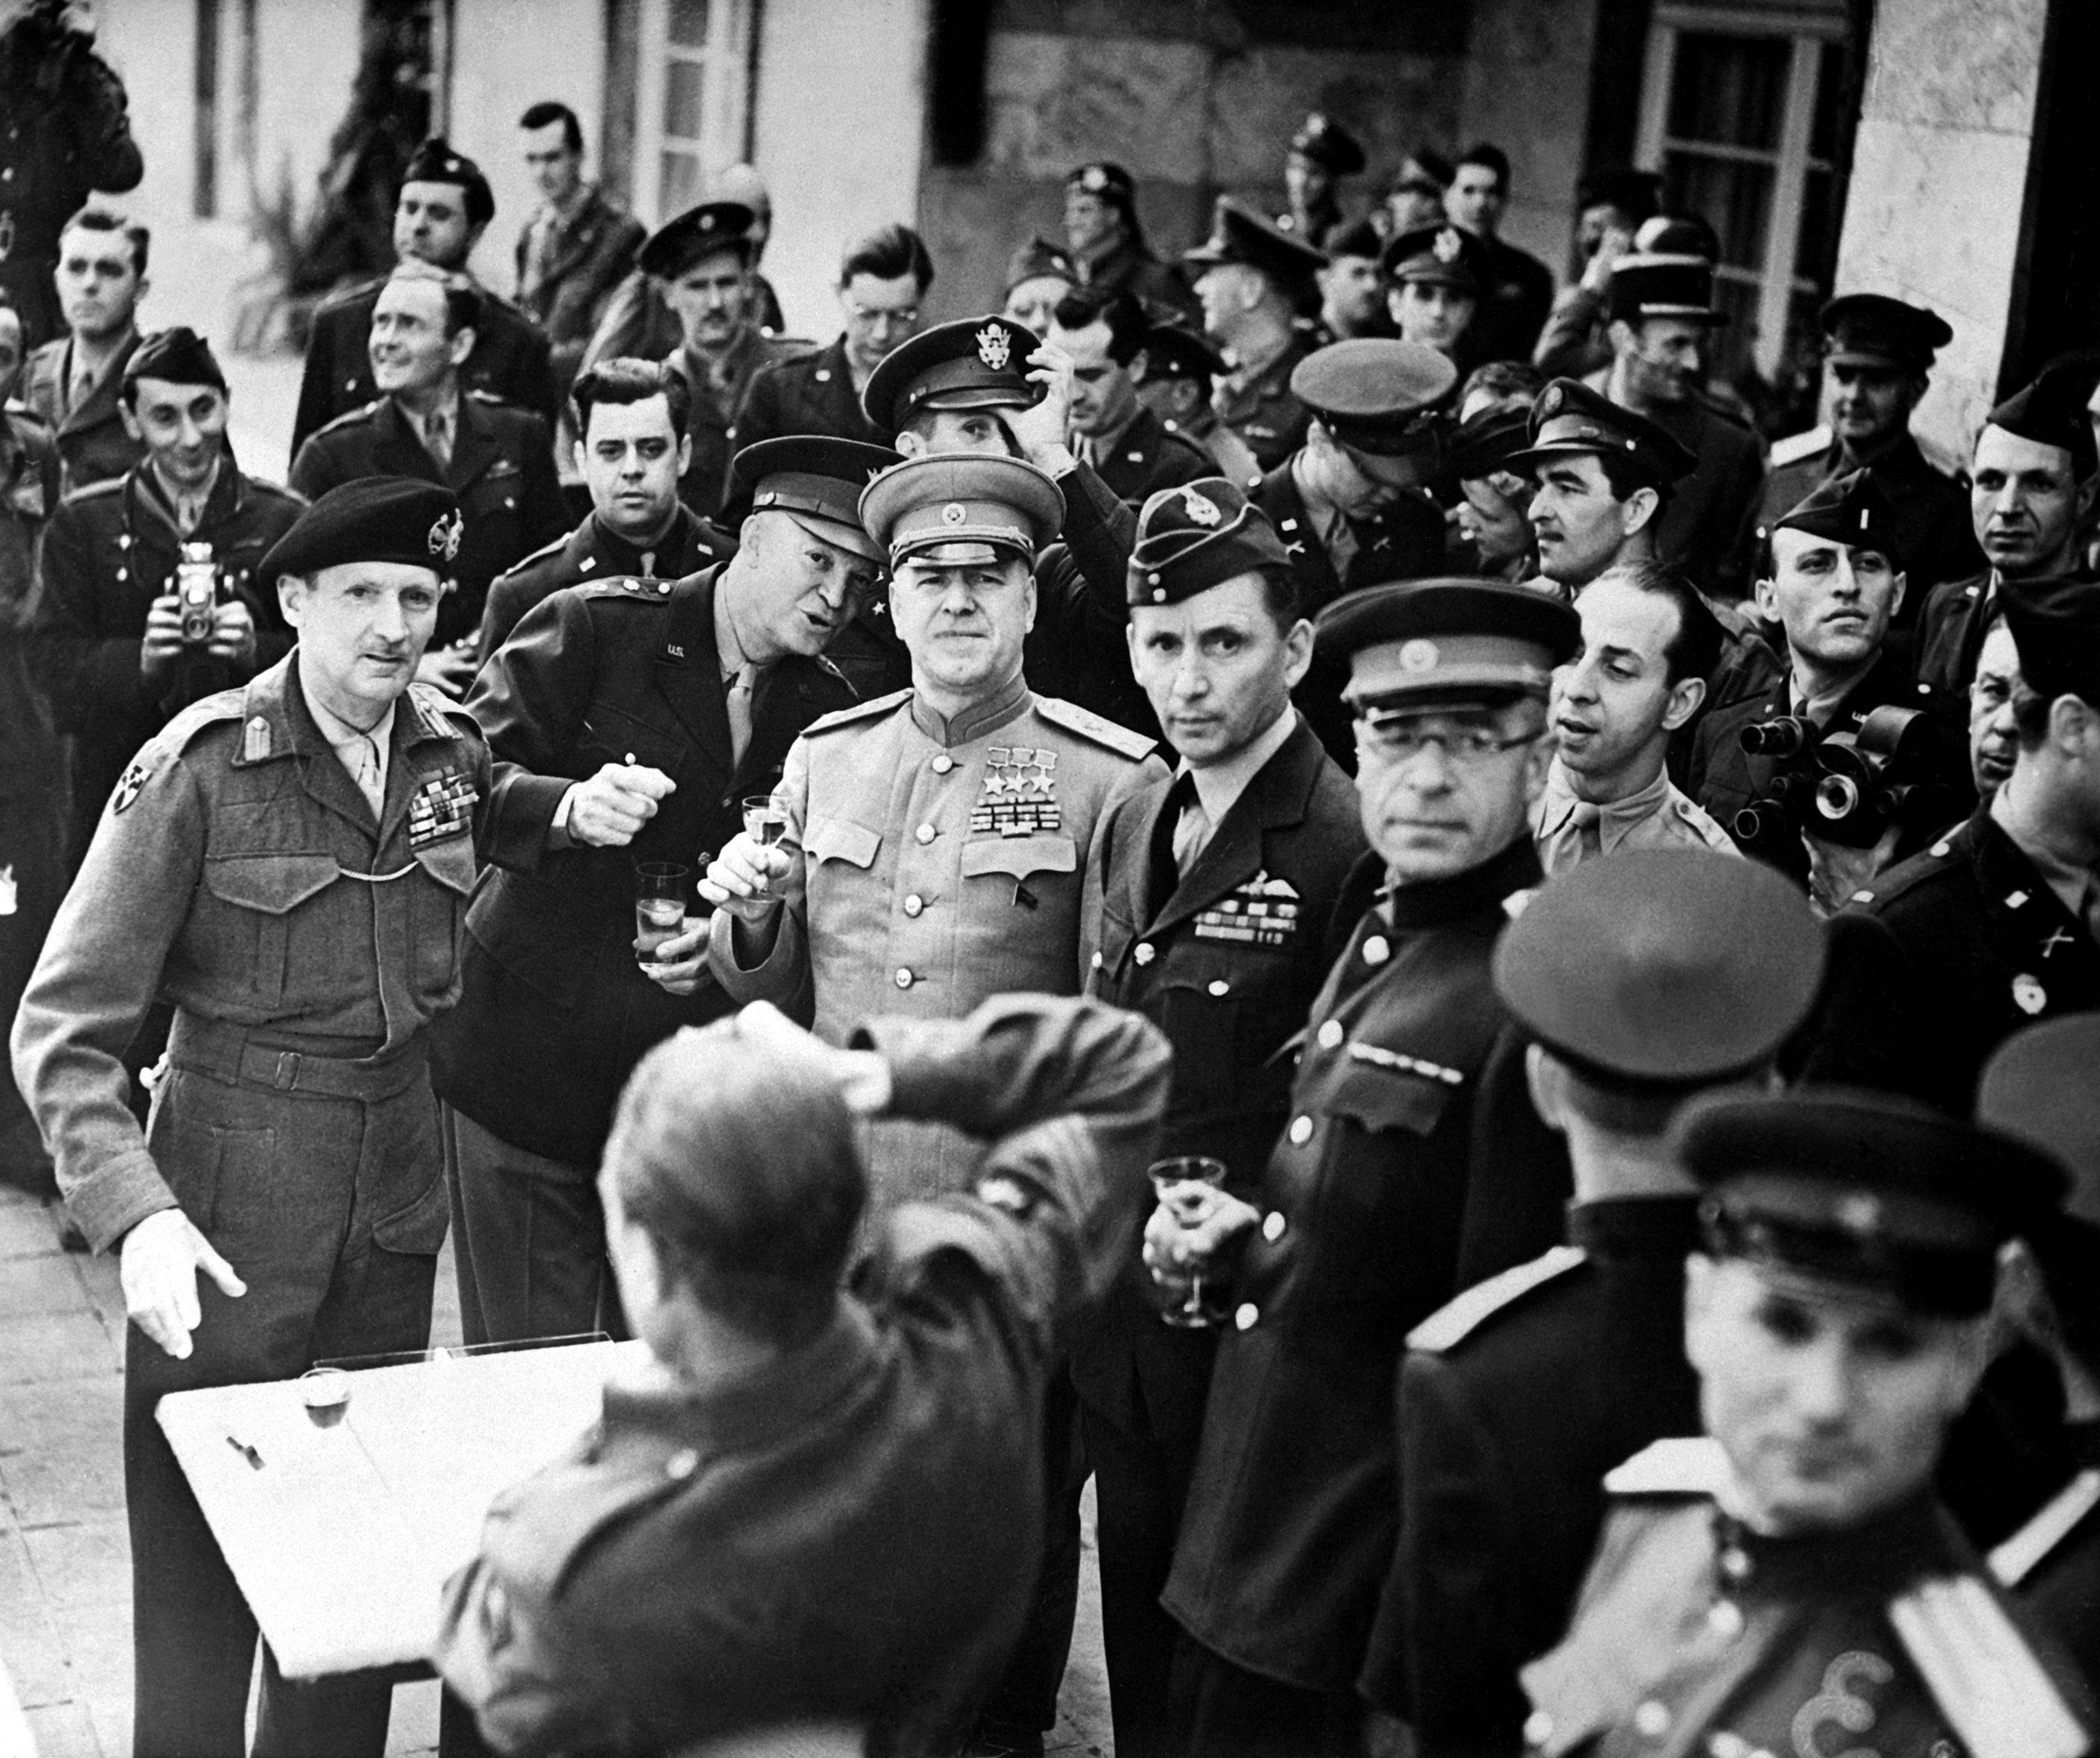 Bernard Montgomery, Dwight Eisenhower, Georgi Zhukov, and Arthur Tedder at Frankfurt, Germany, 5 Jun 1945